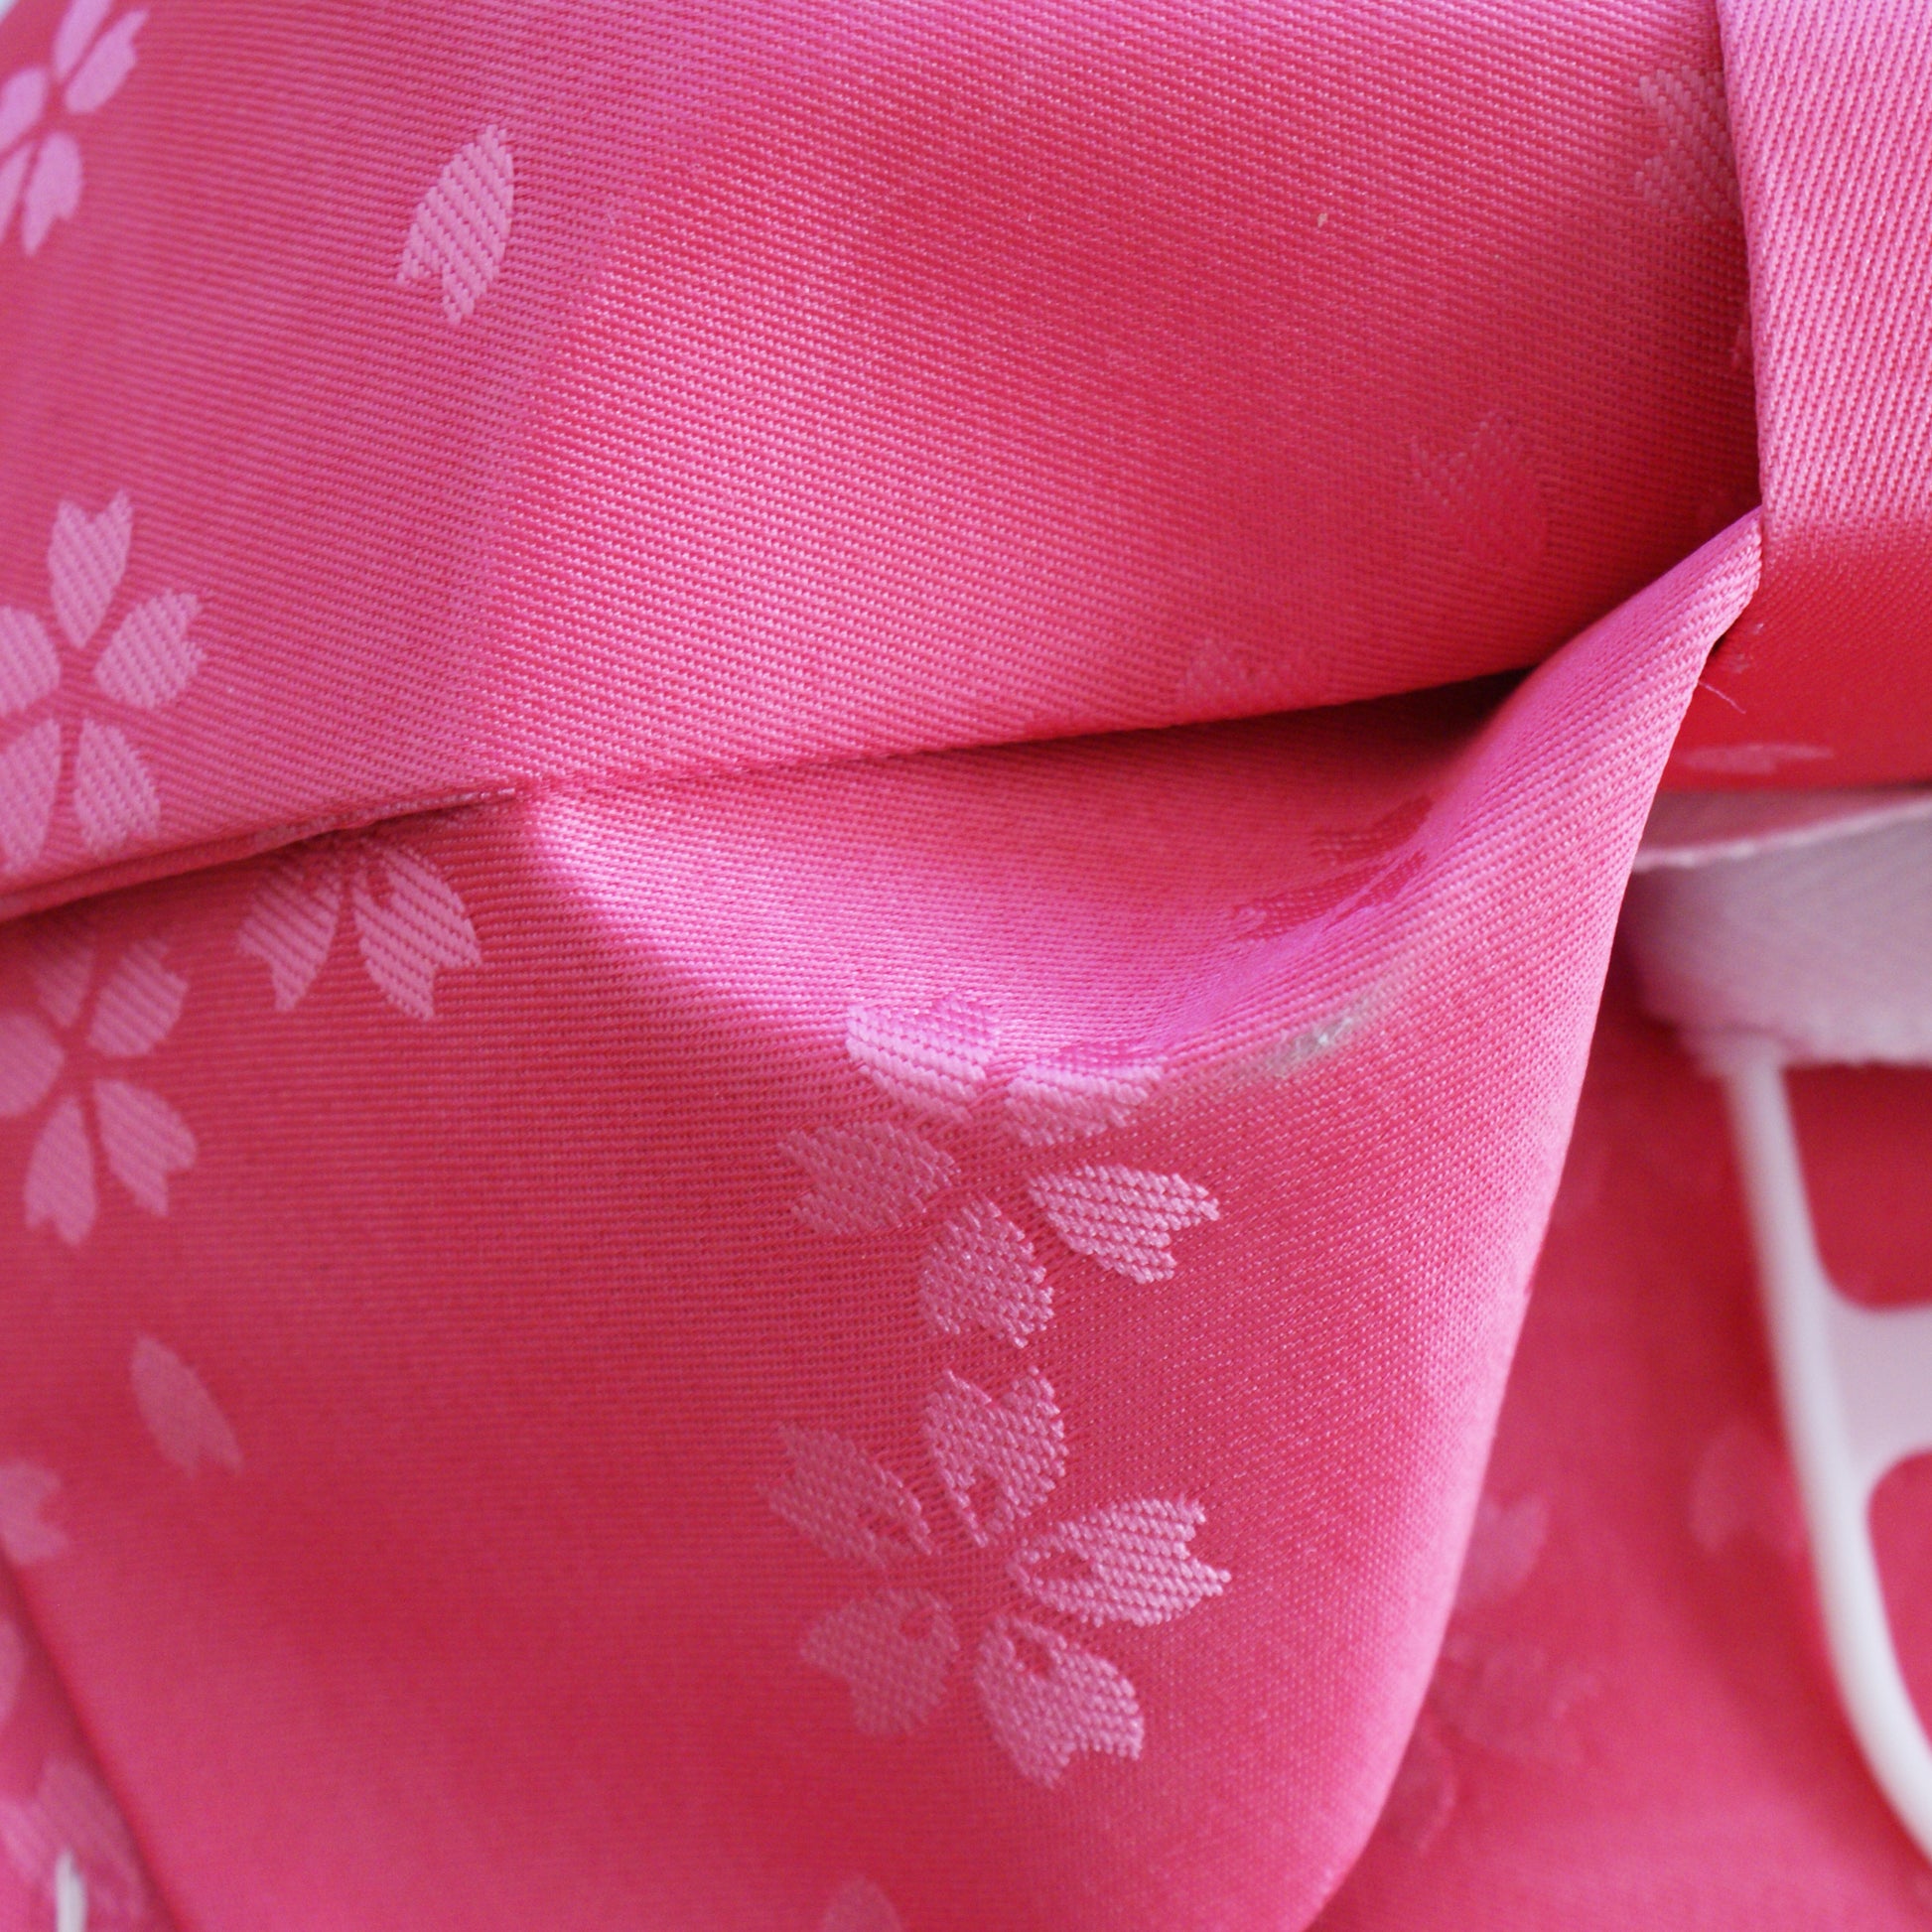 Pre-Tied Obi Belt - Cherry Blossom Pink